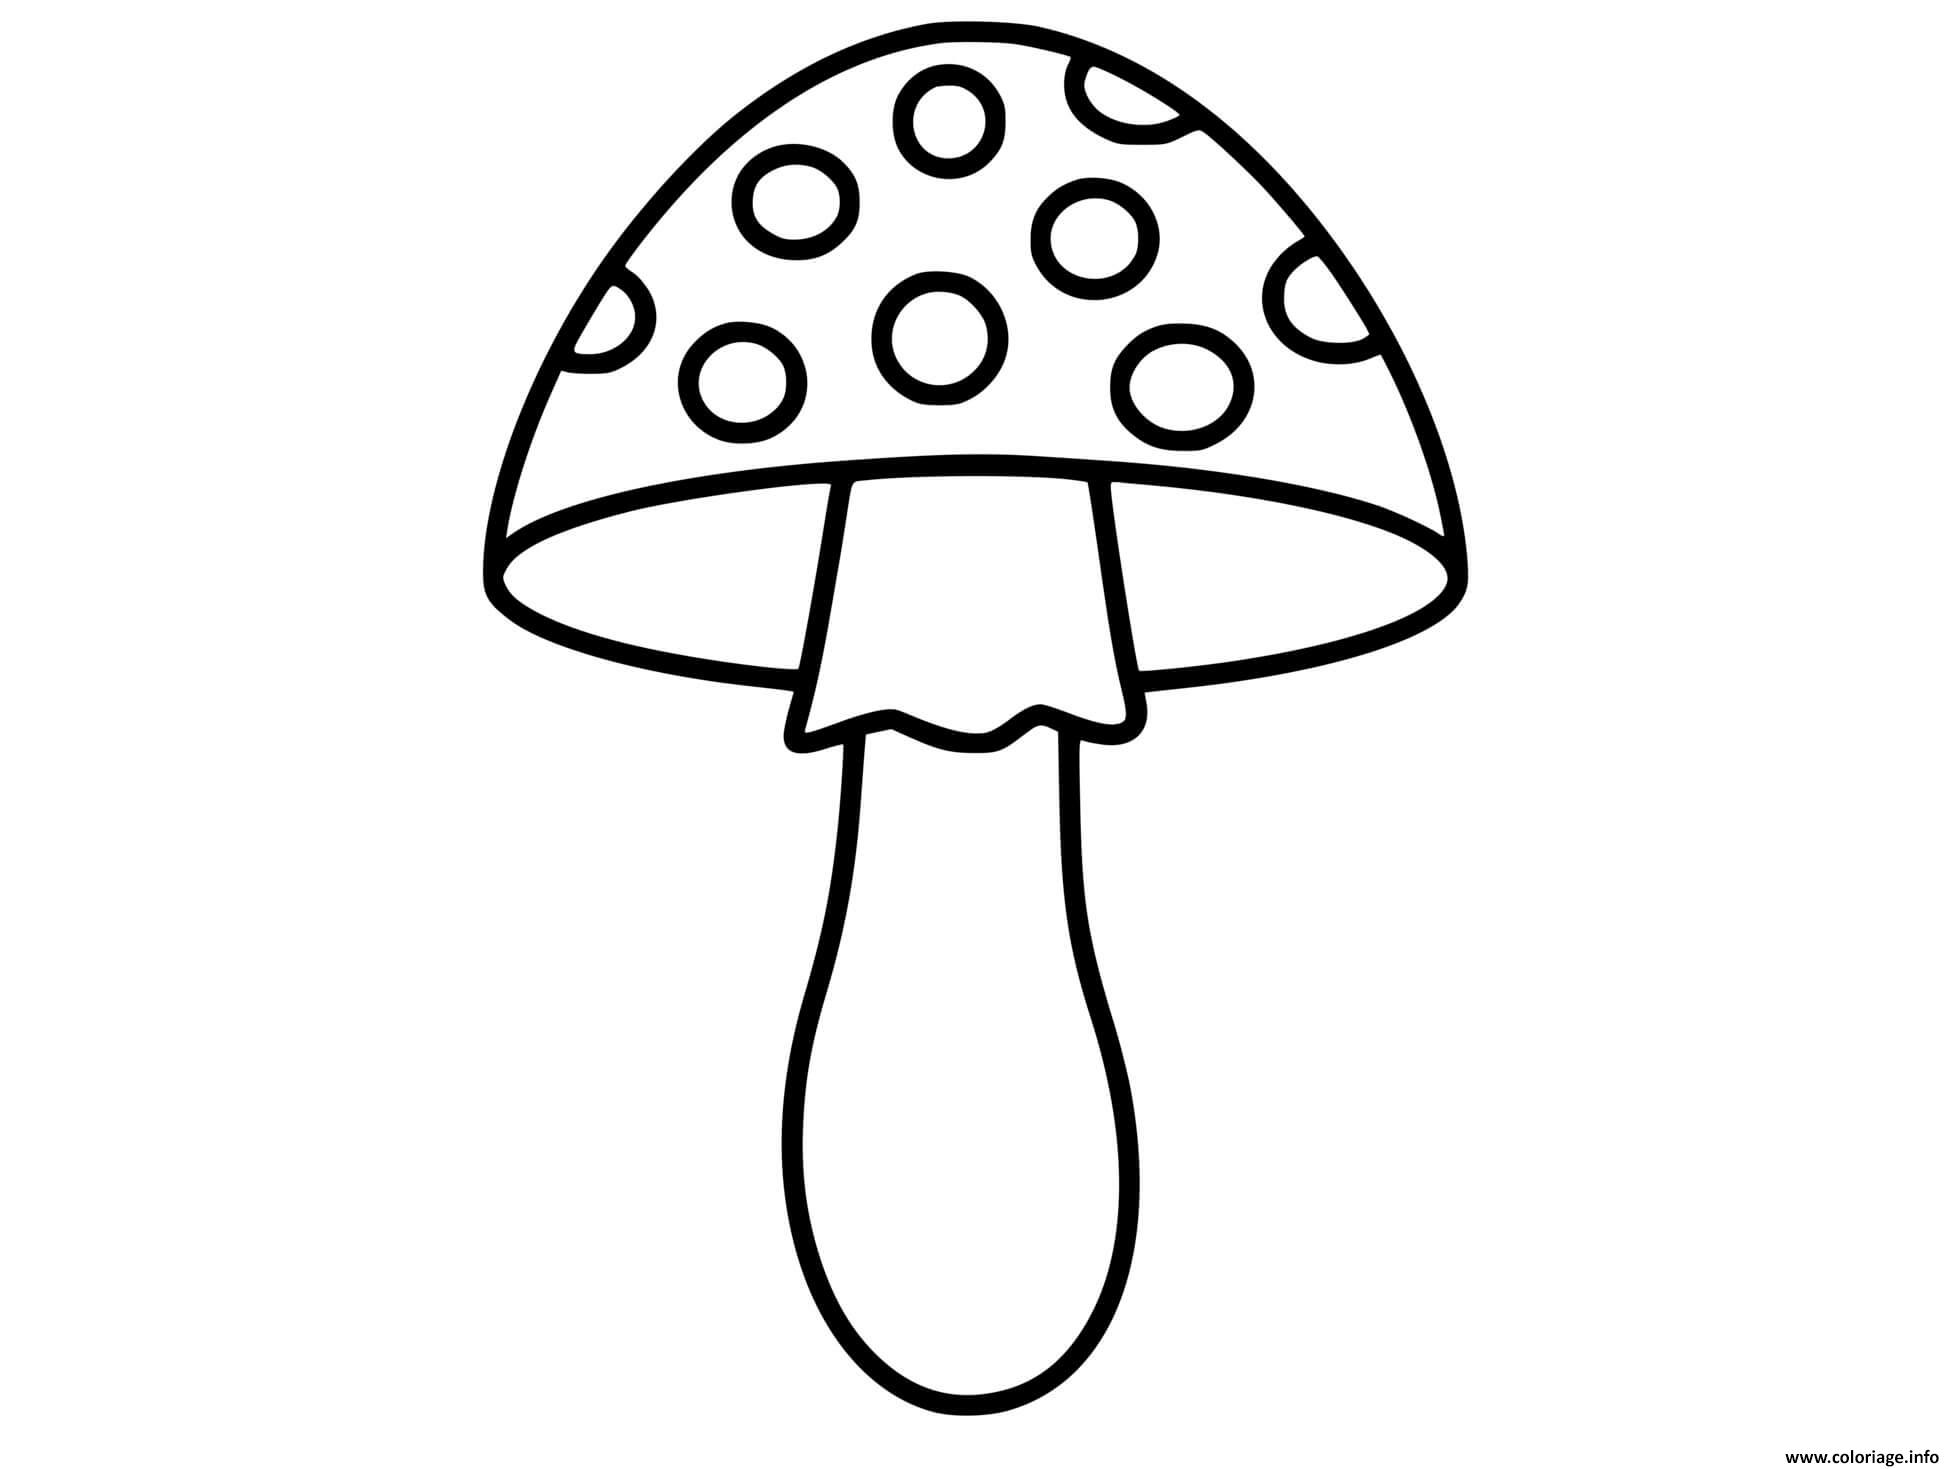 Dessin champignon volvaire gluante Coloriage Gratuit à Imprimer